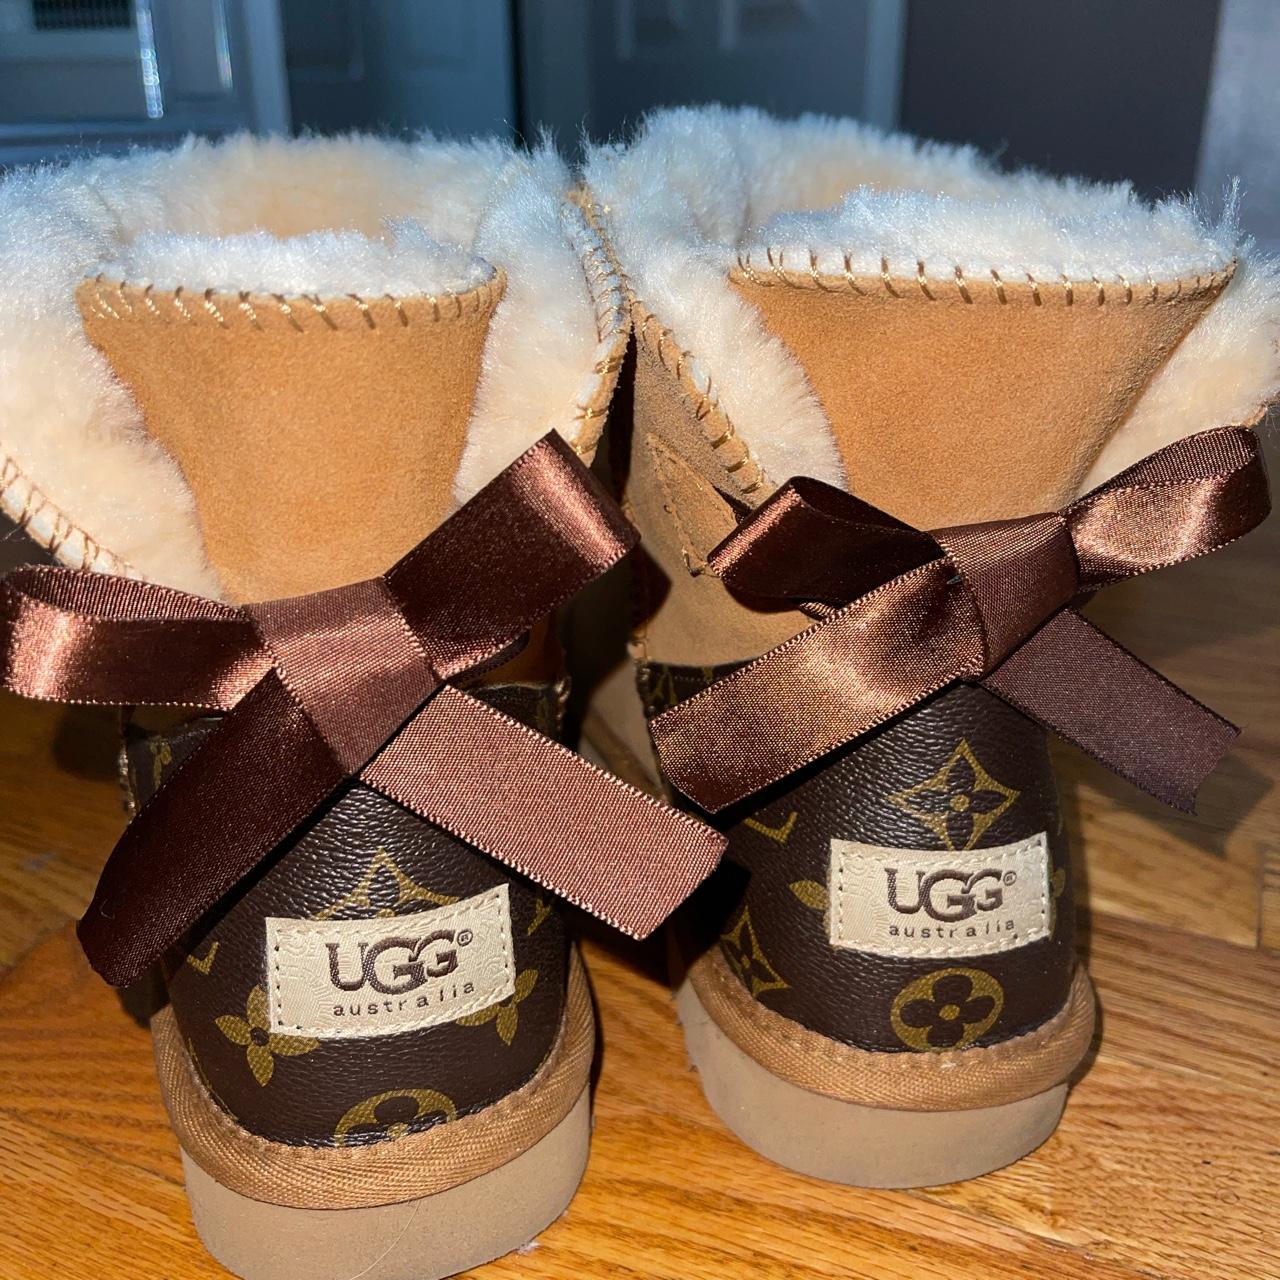 Fur Leopard sweatshirt Louis Vuitton Bag Ugg Boots – Classy clean chic